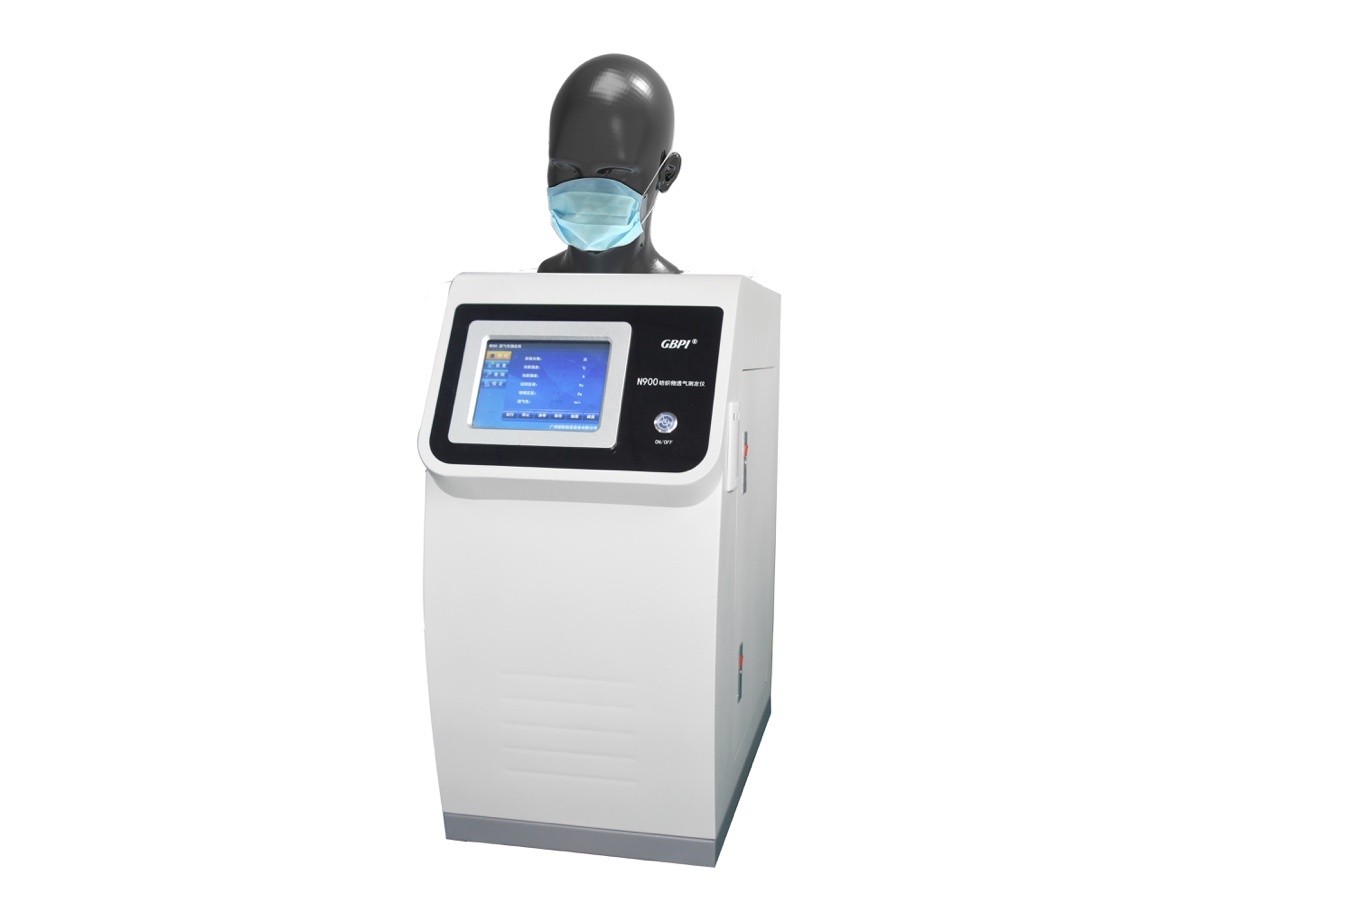 GBN702呼吸阻力测试仪-口罩检测设备厂家